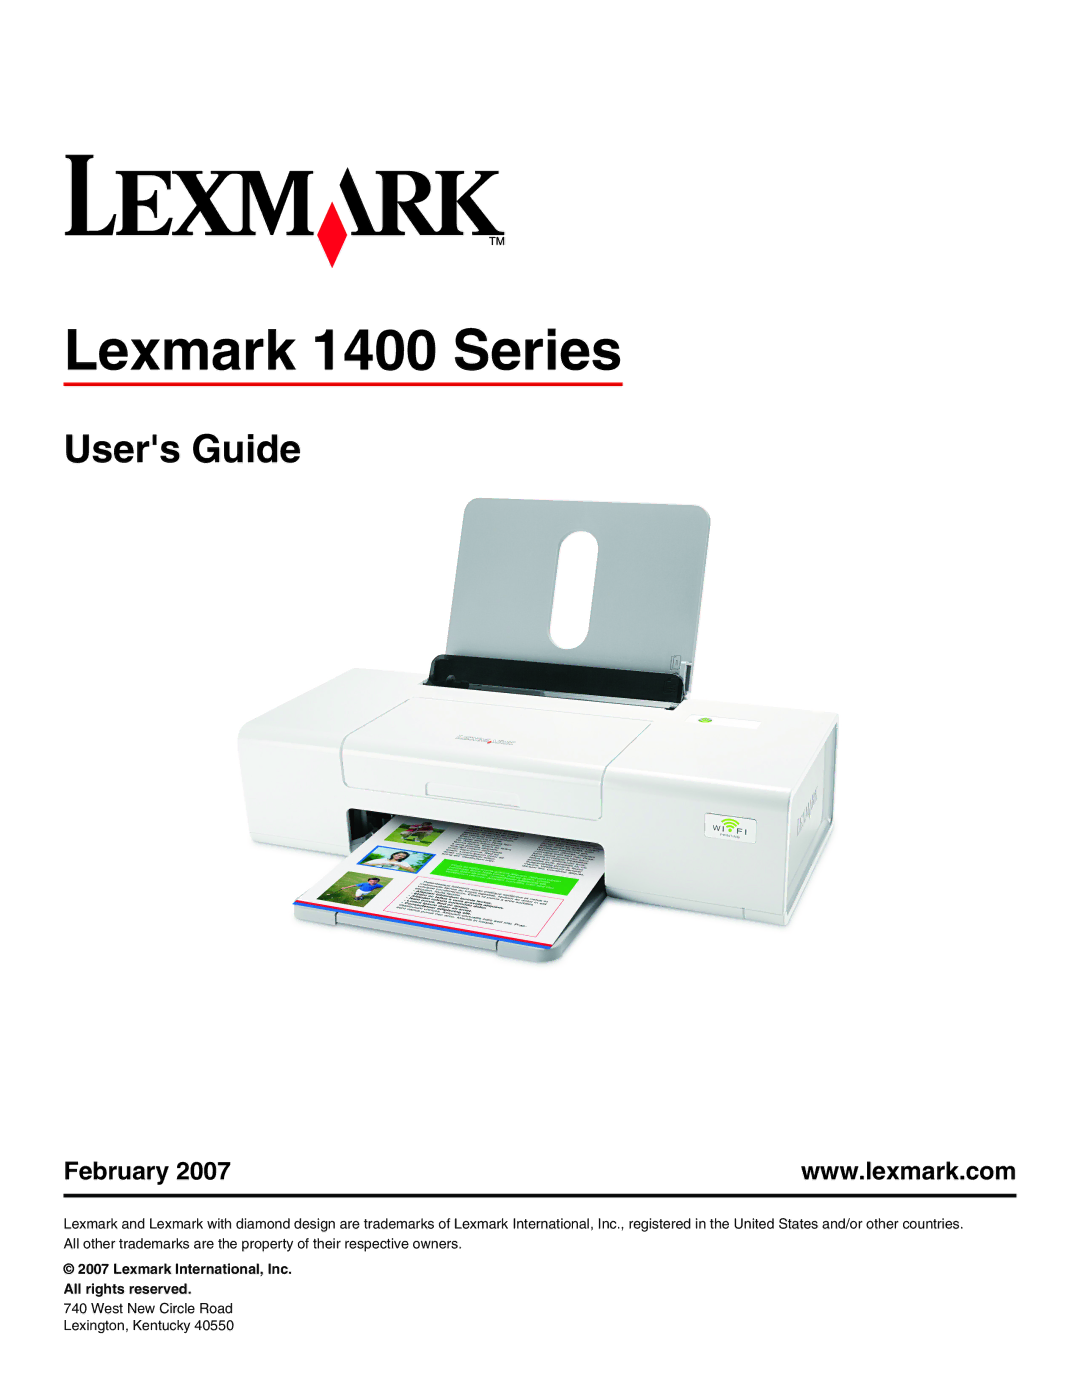 Lexmark manual Lexmark 1400 Series, Users Guide 